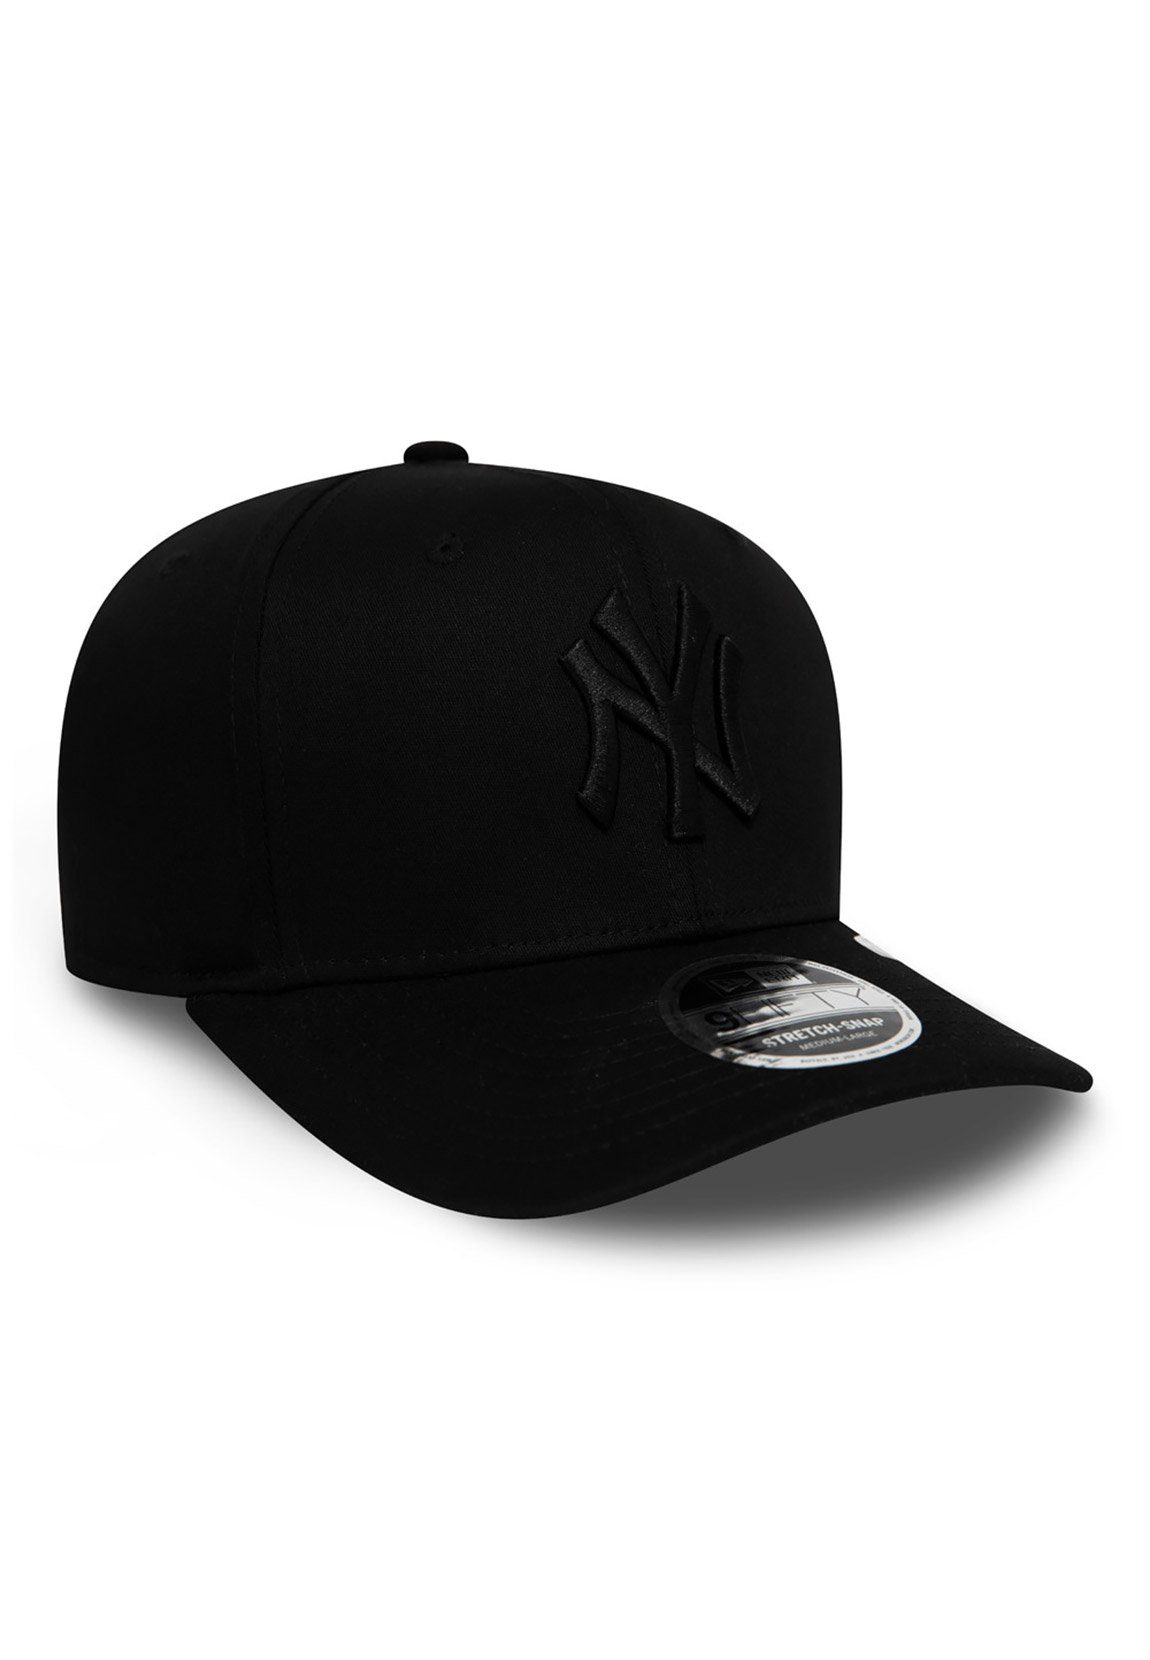 NY New 9Fifty Tonal Black Cap Cap Schwarz Snapback Schwarz Snapback New YANKEES Era Era